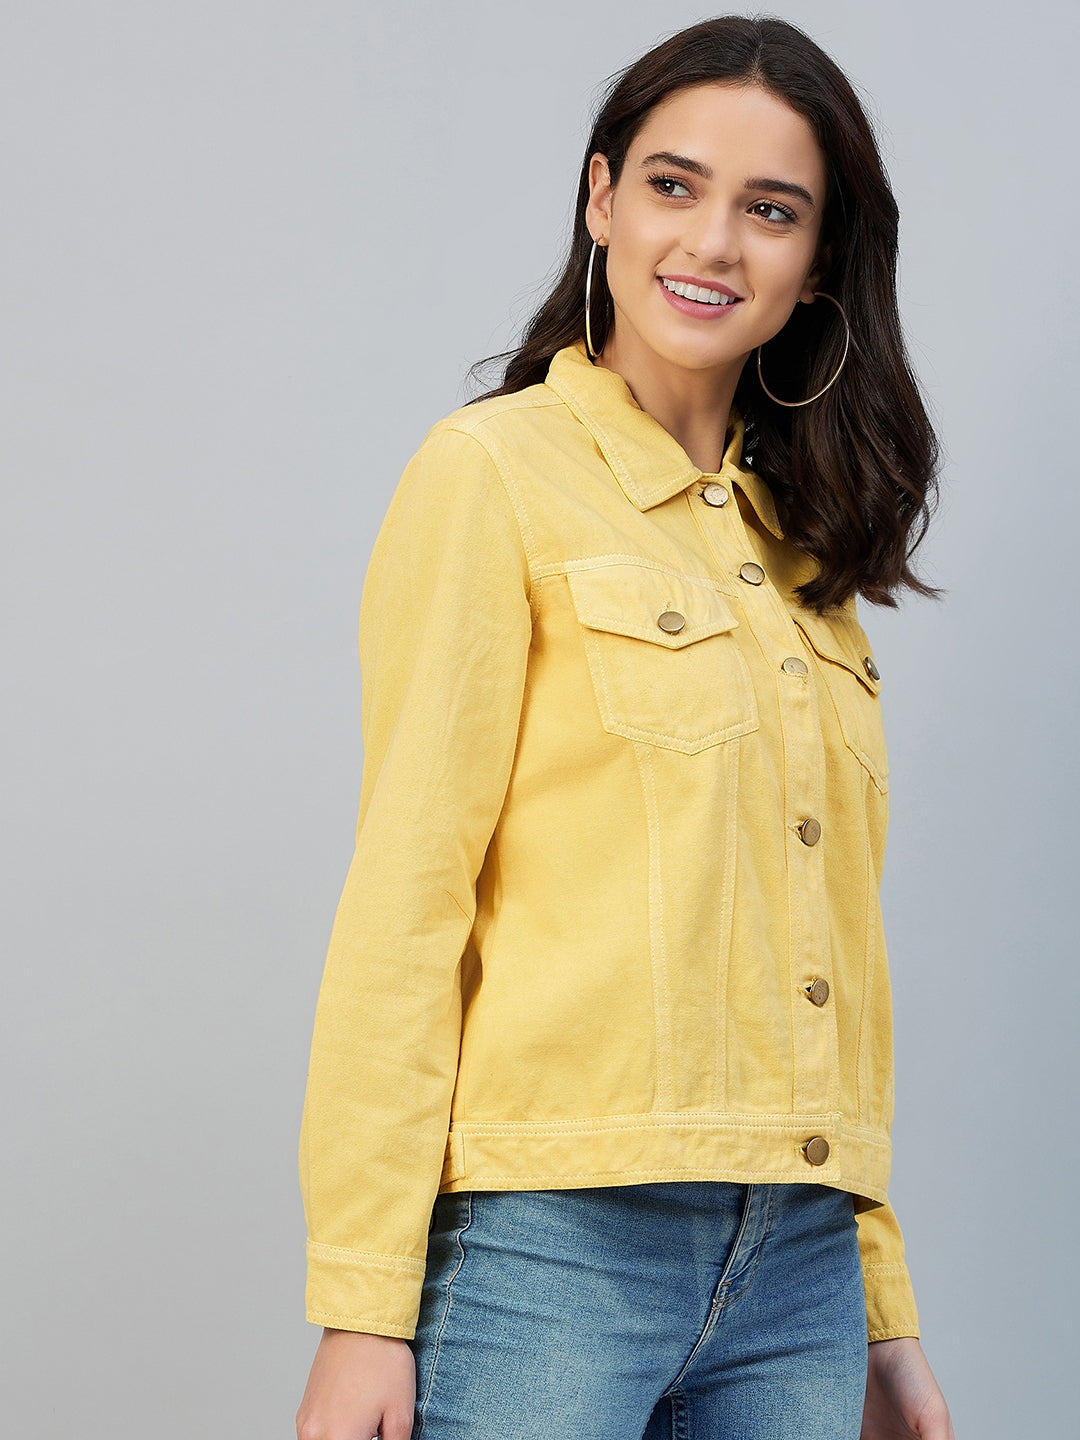 Women's Yellow Cotton Twill Jacket